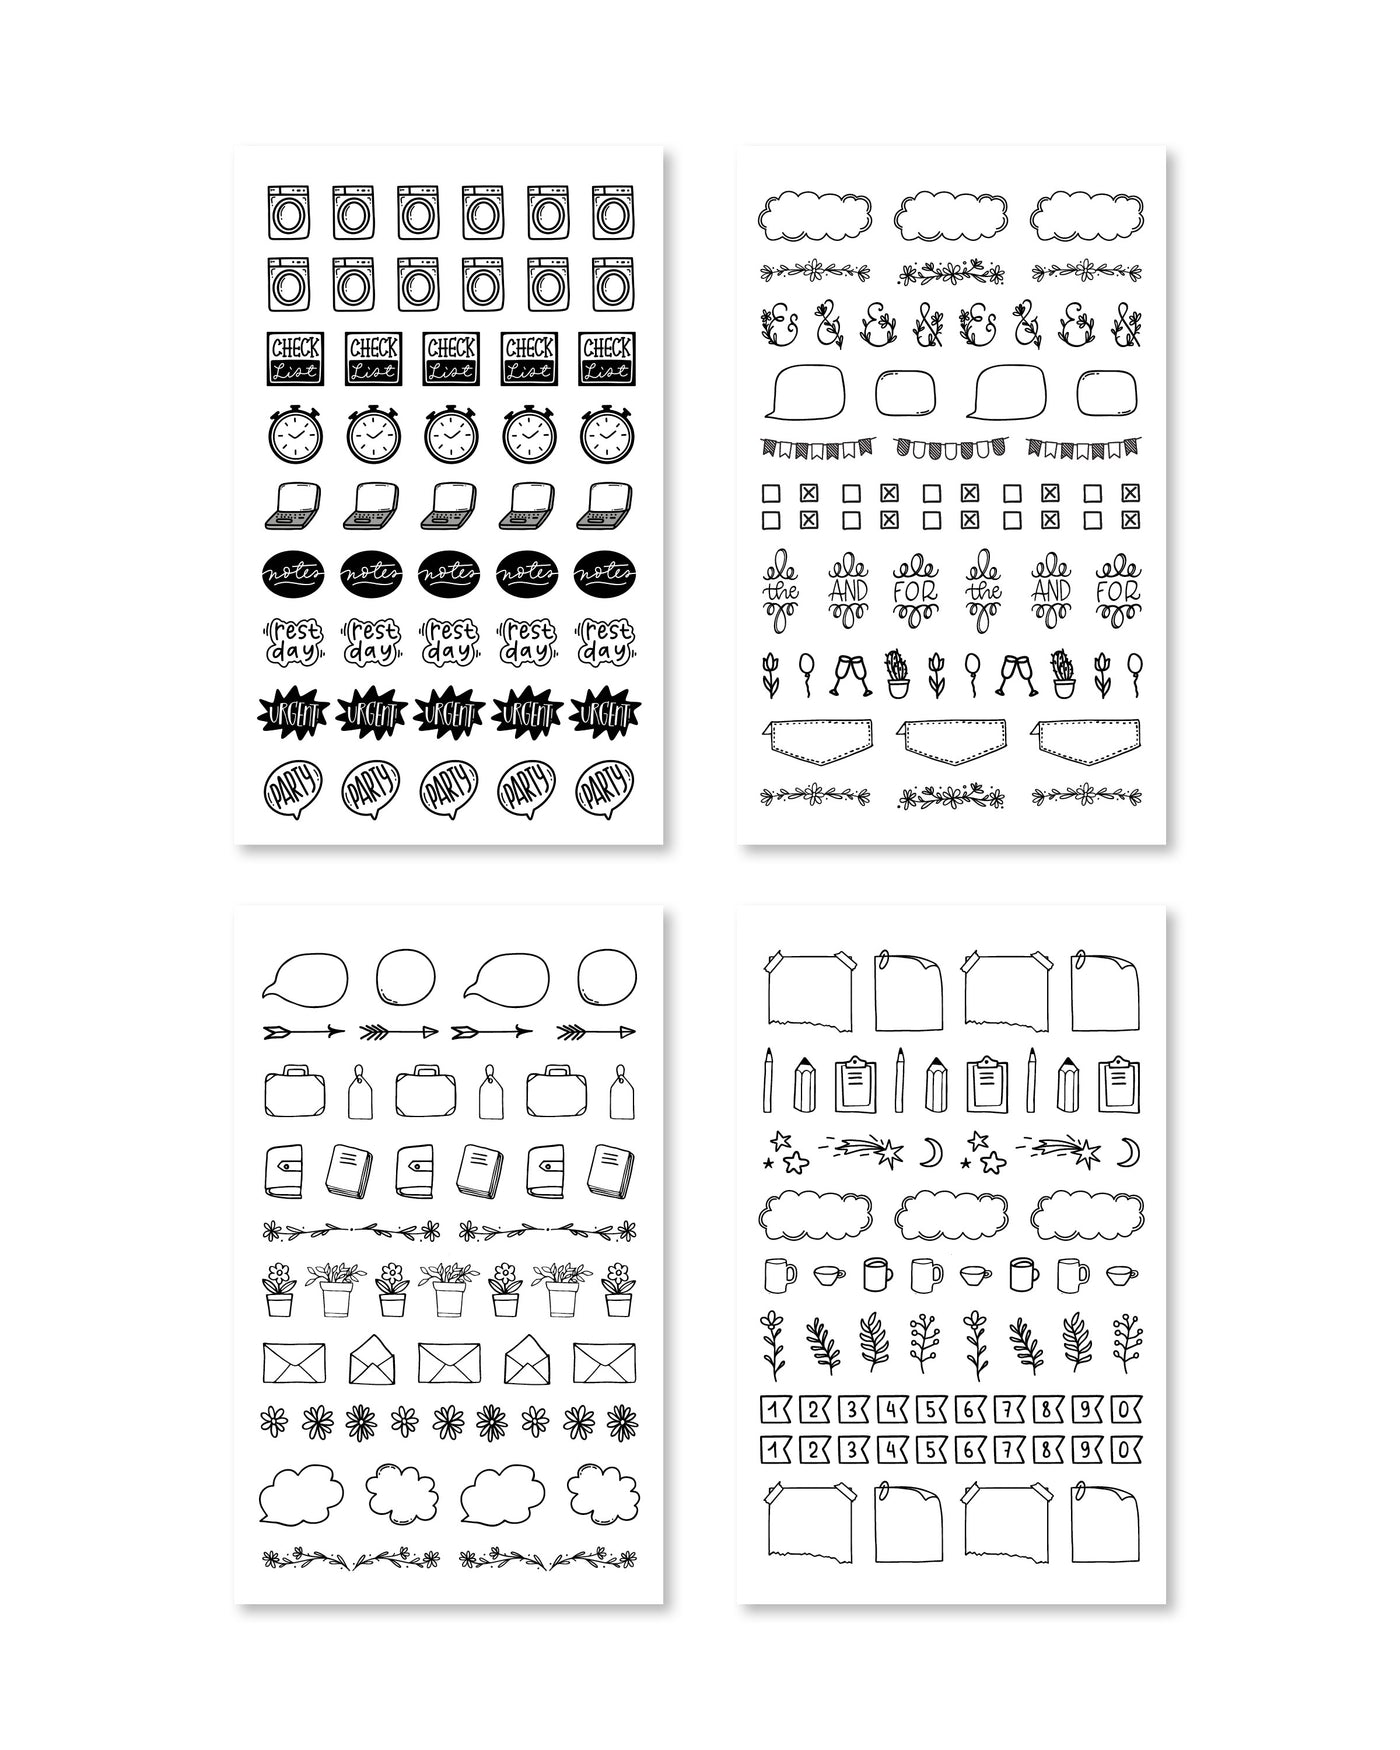 Bullet Journal Sticker Book | Decorative Stickers | Shop Rongrong